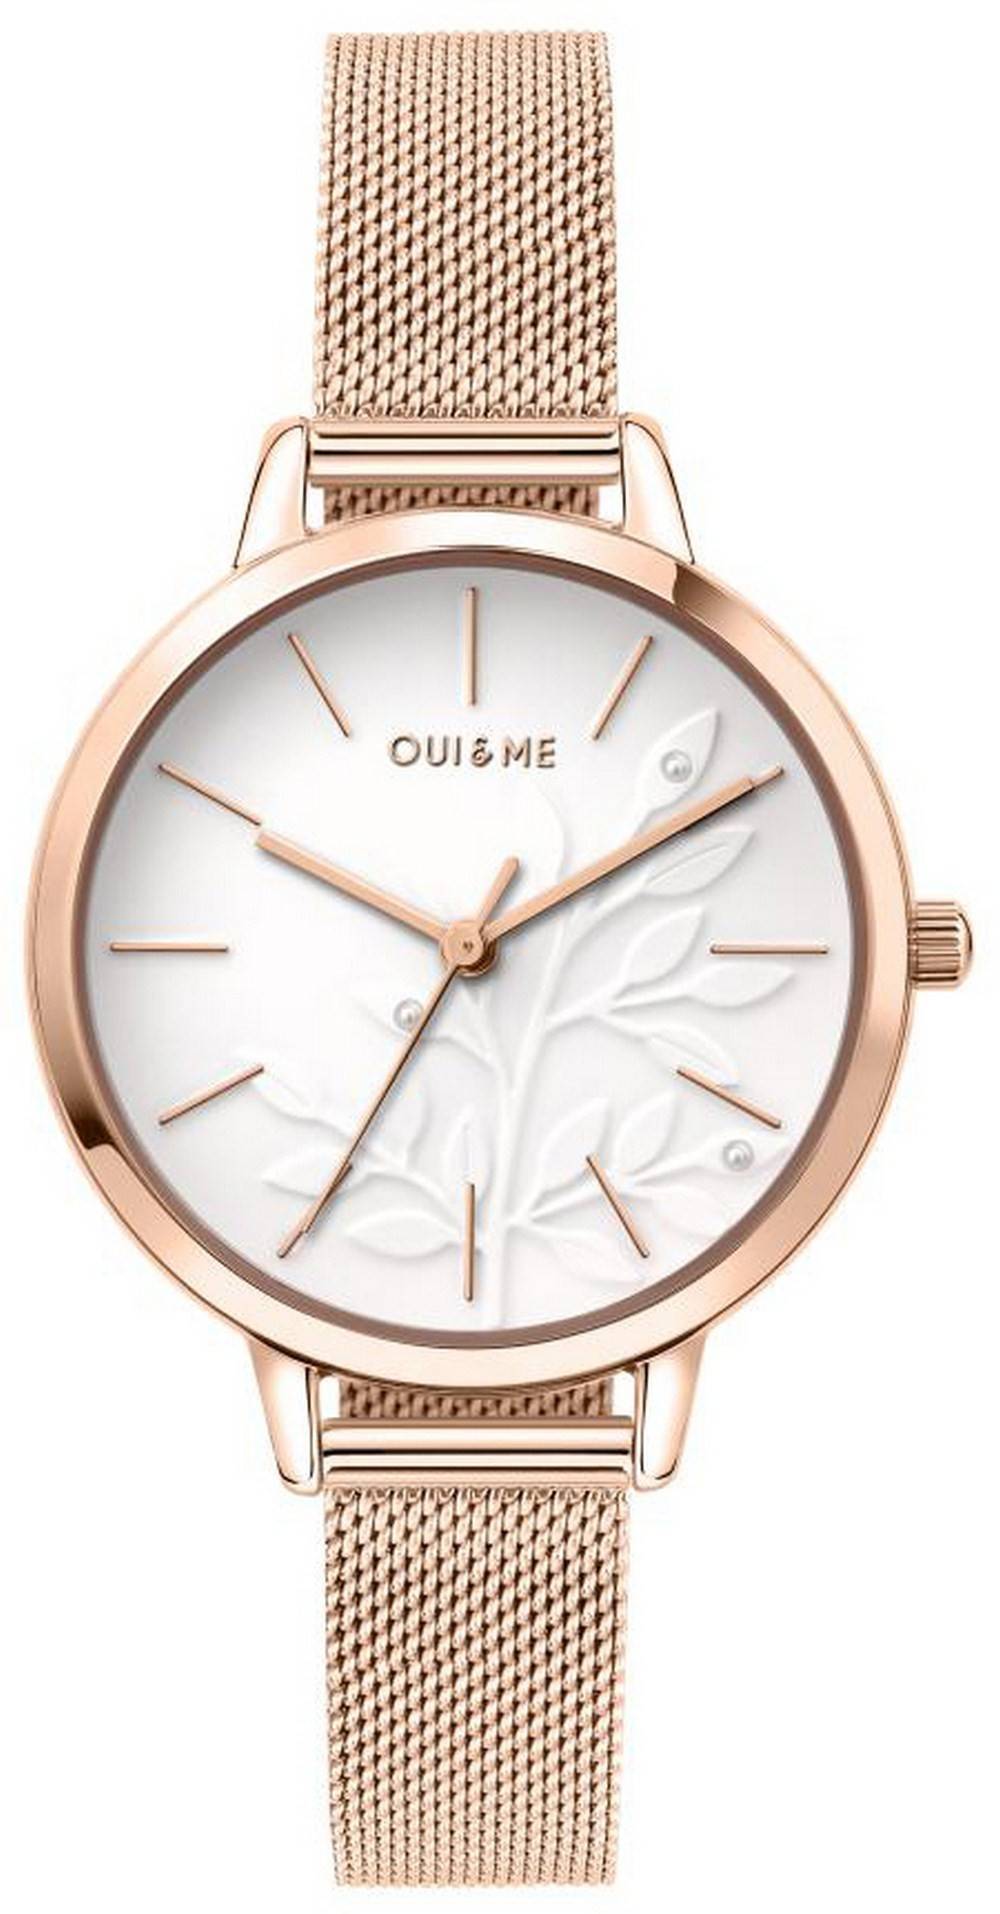 Oui & Me Fleurette White Dial Rose Gold Tone Stainless Steel Quartz ME010134 Women's Watch